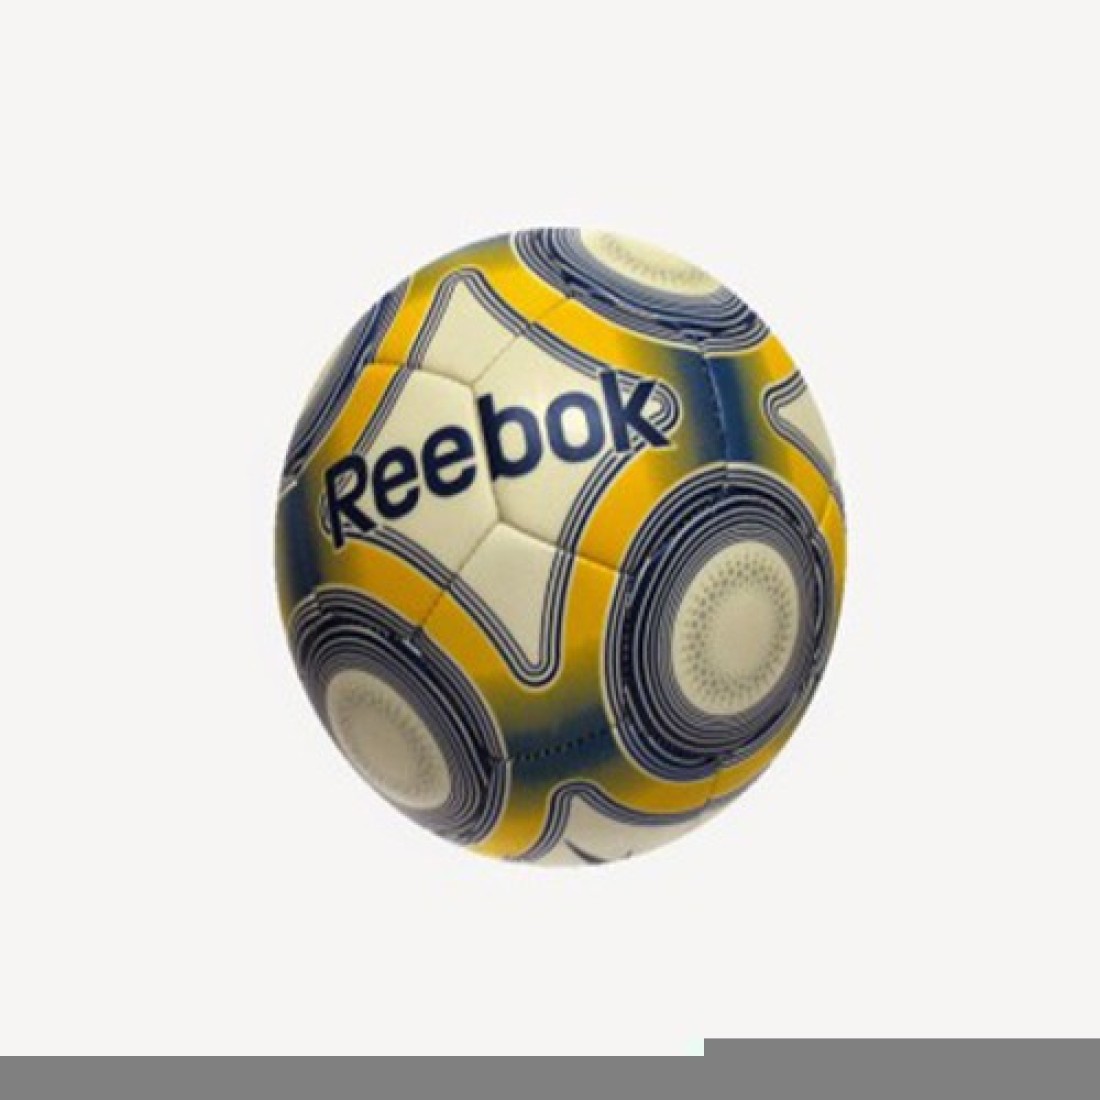 reebok football ball price